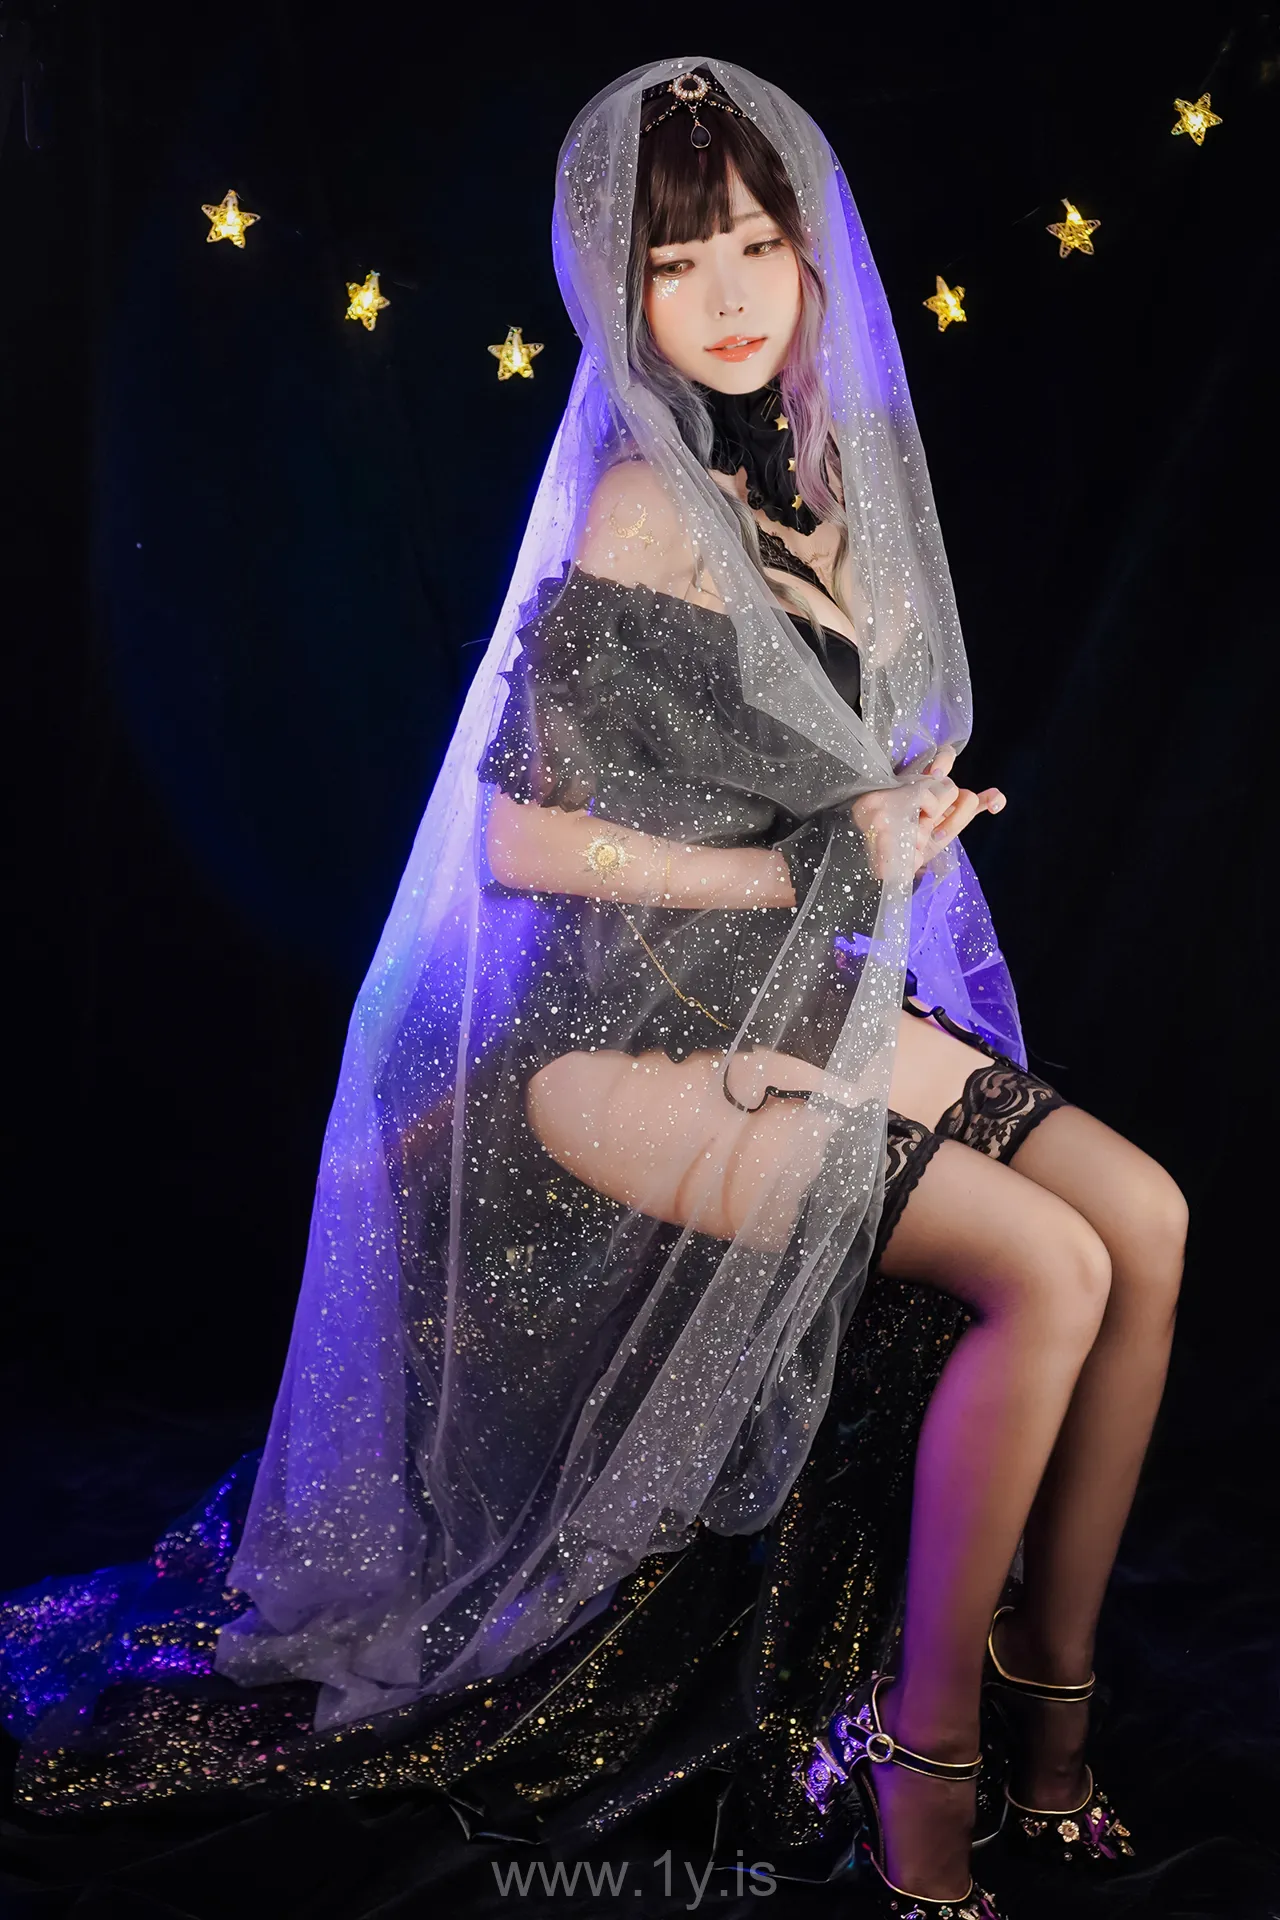 ElyEE子 NO.81 Ely_eee(ElyEE子) - Astrology Witch